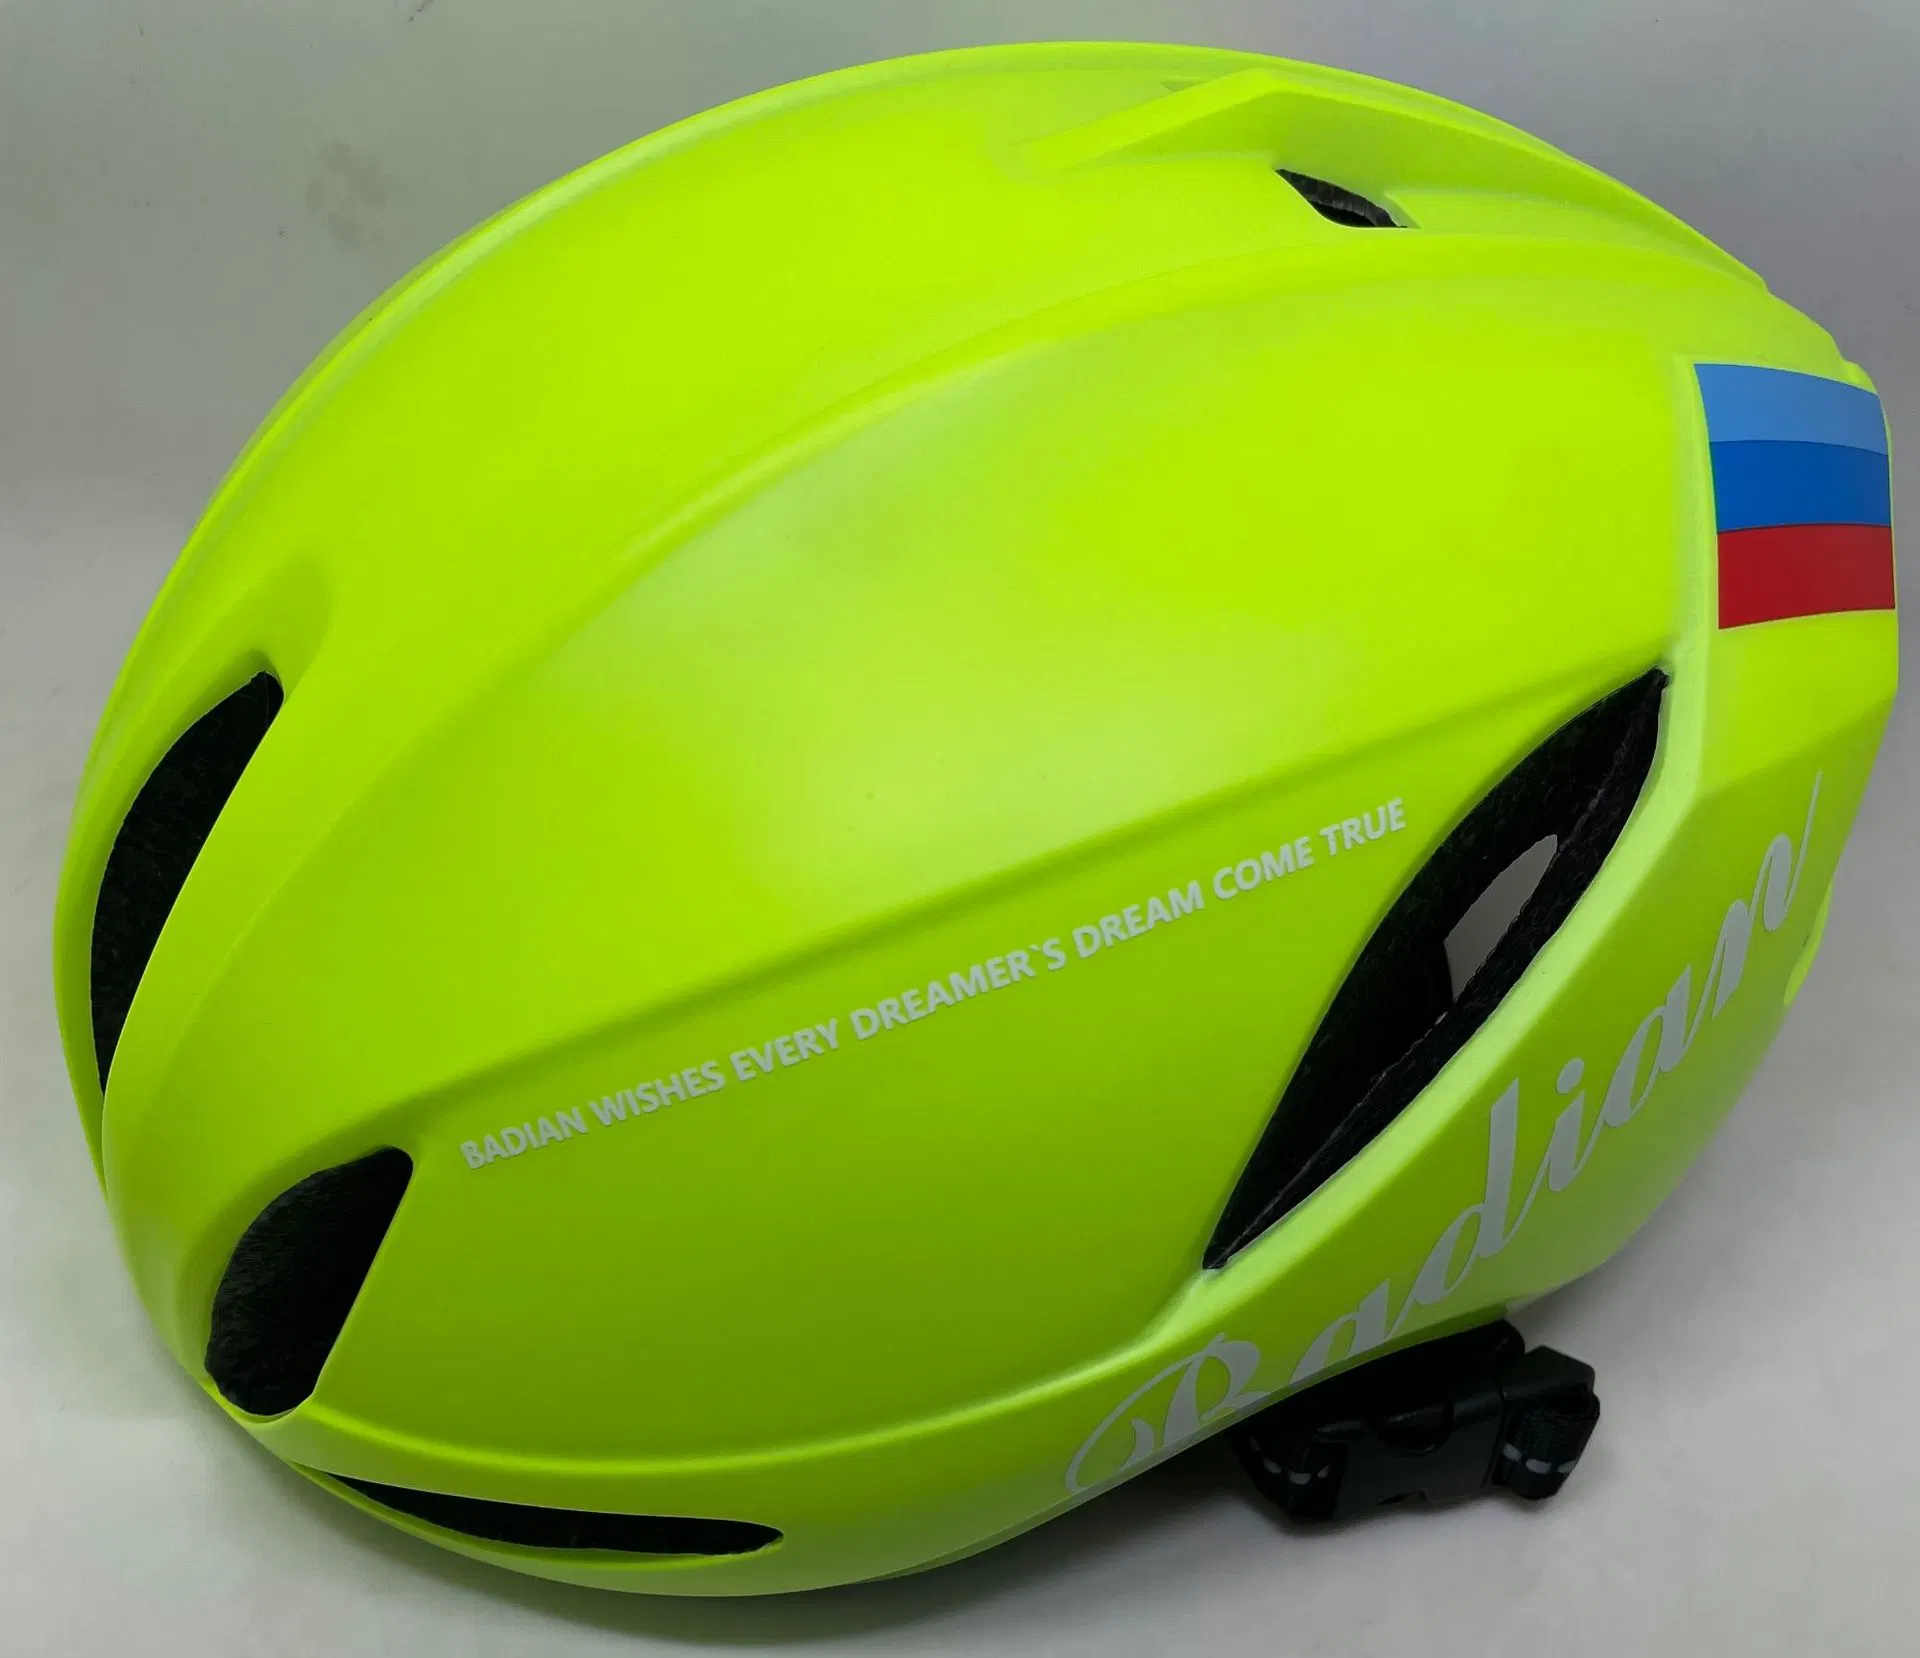 Casco de equitación Vehículos de carretera bicicletas de casco ultraligero de deportes de equipo de equitación